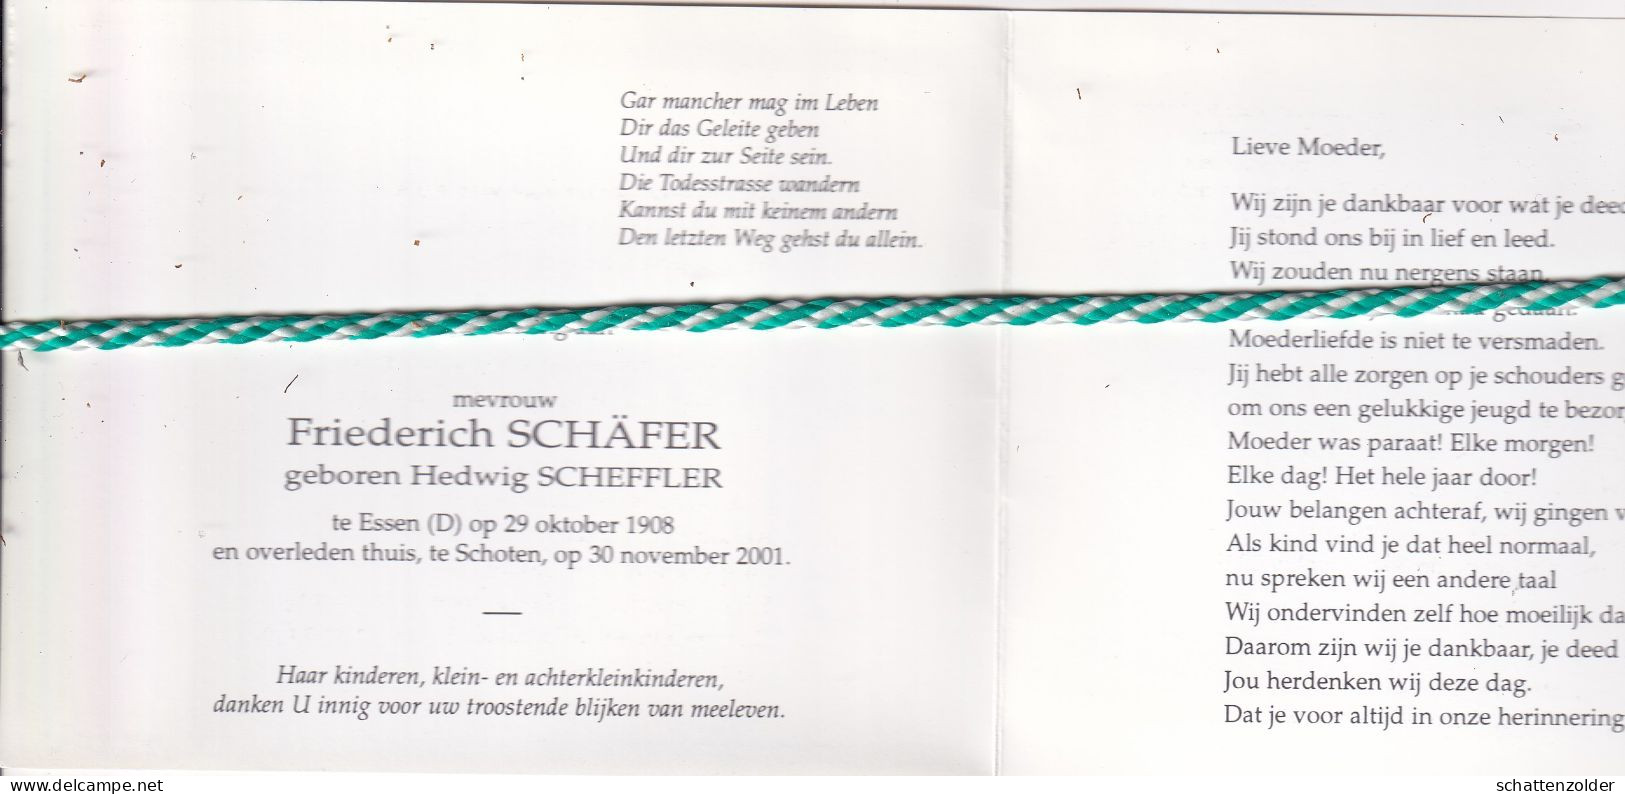 Hedwig Scheffler-Schäfer, Essen (D) 1908, Schoten 2001. Foto - Décès